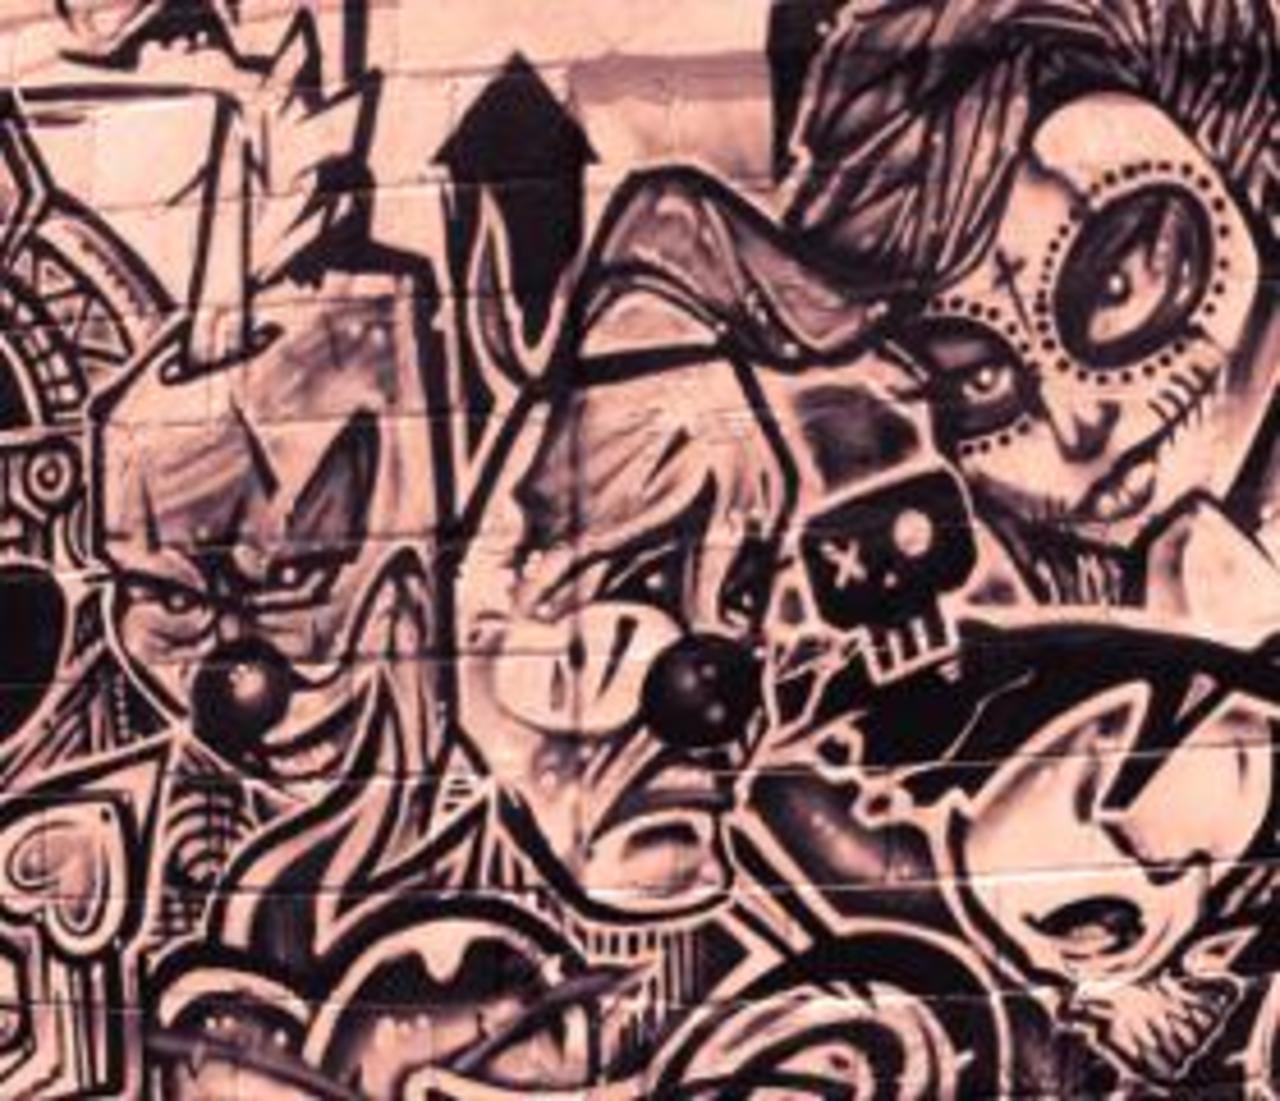 Are we happy or maybe just pretending? #EnglishBeat #streetart #graffiti #art #design #toronto #streetphotography http://t.co/JZ8585lOCS